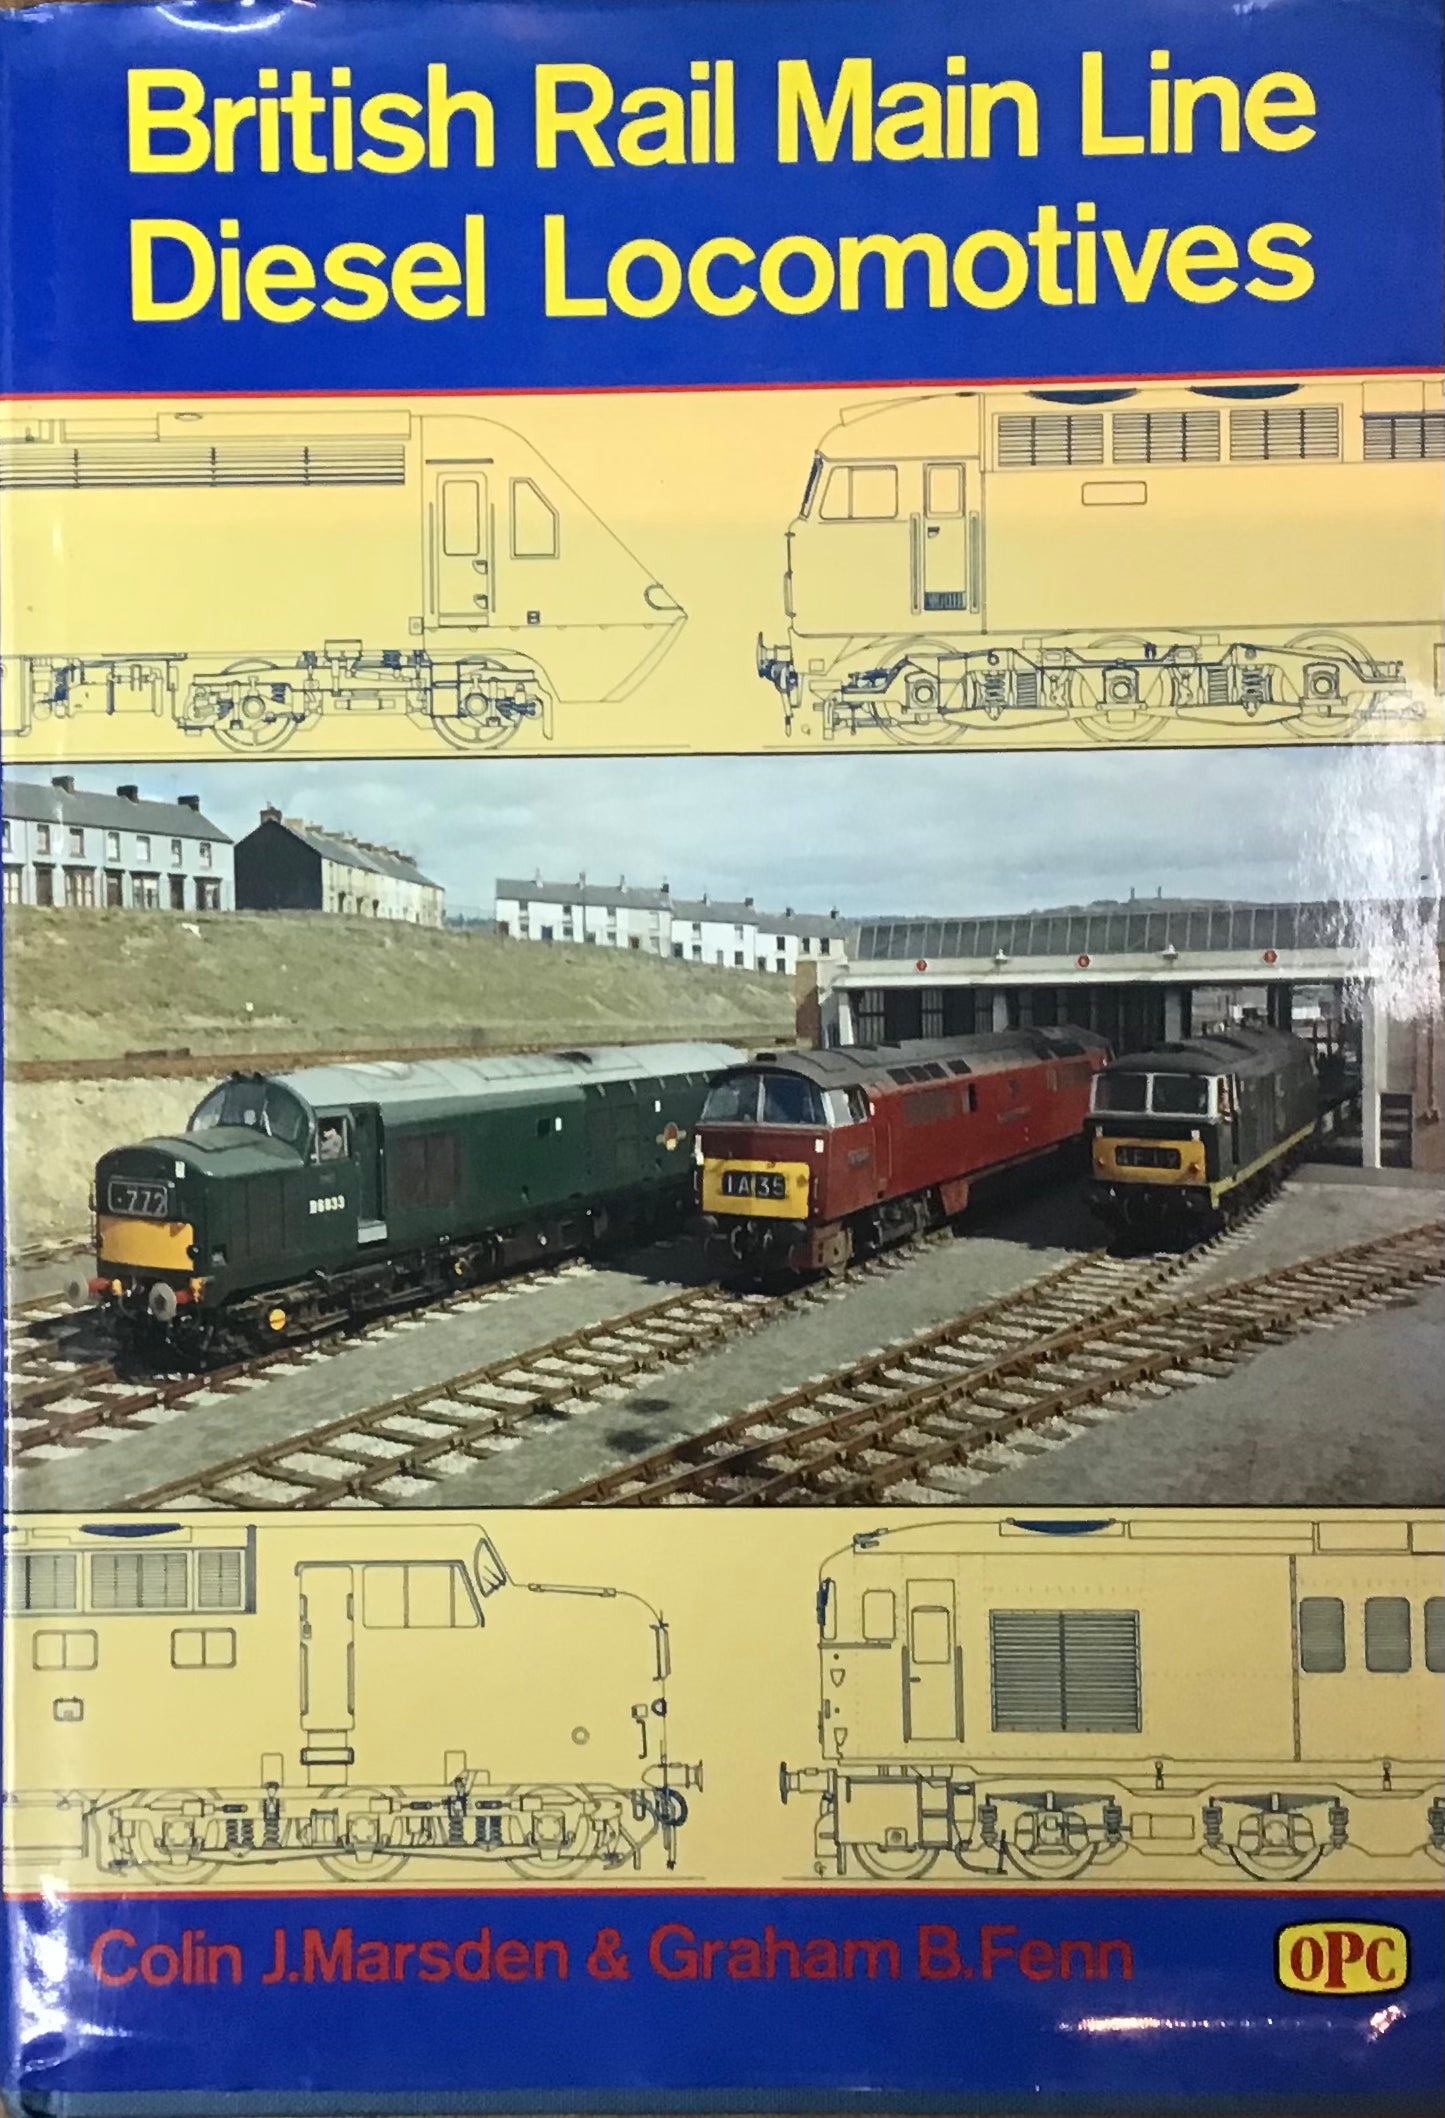 British Rail Main Line Diesel Locomotives by Colin J. Marsden & Graham B.Fenn - Chester Model Centre